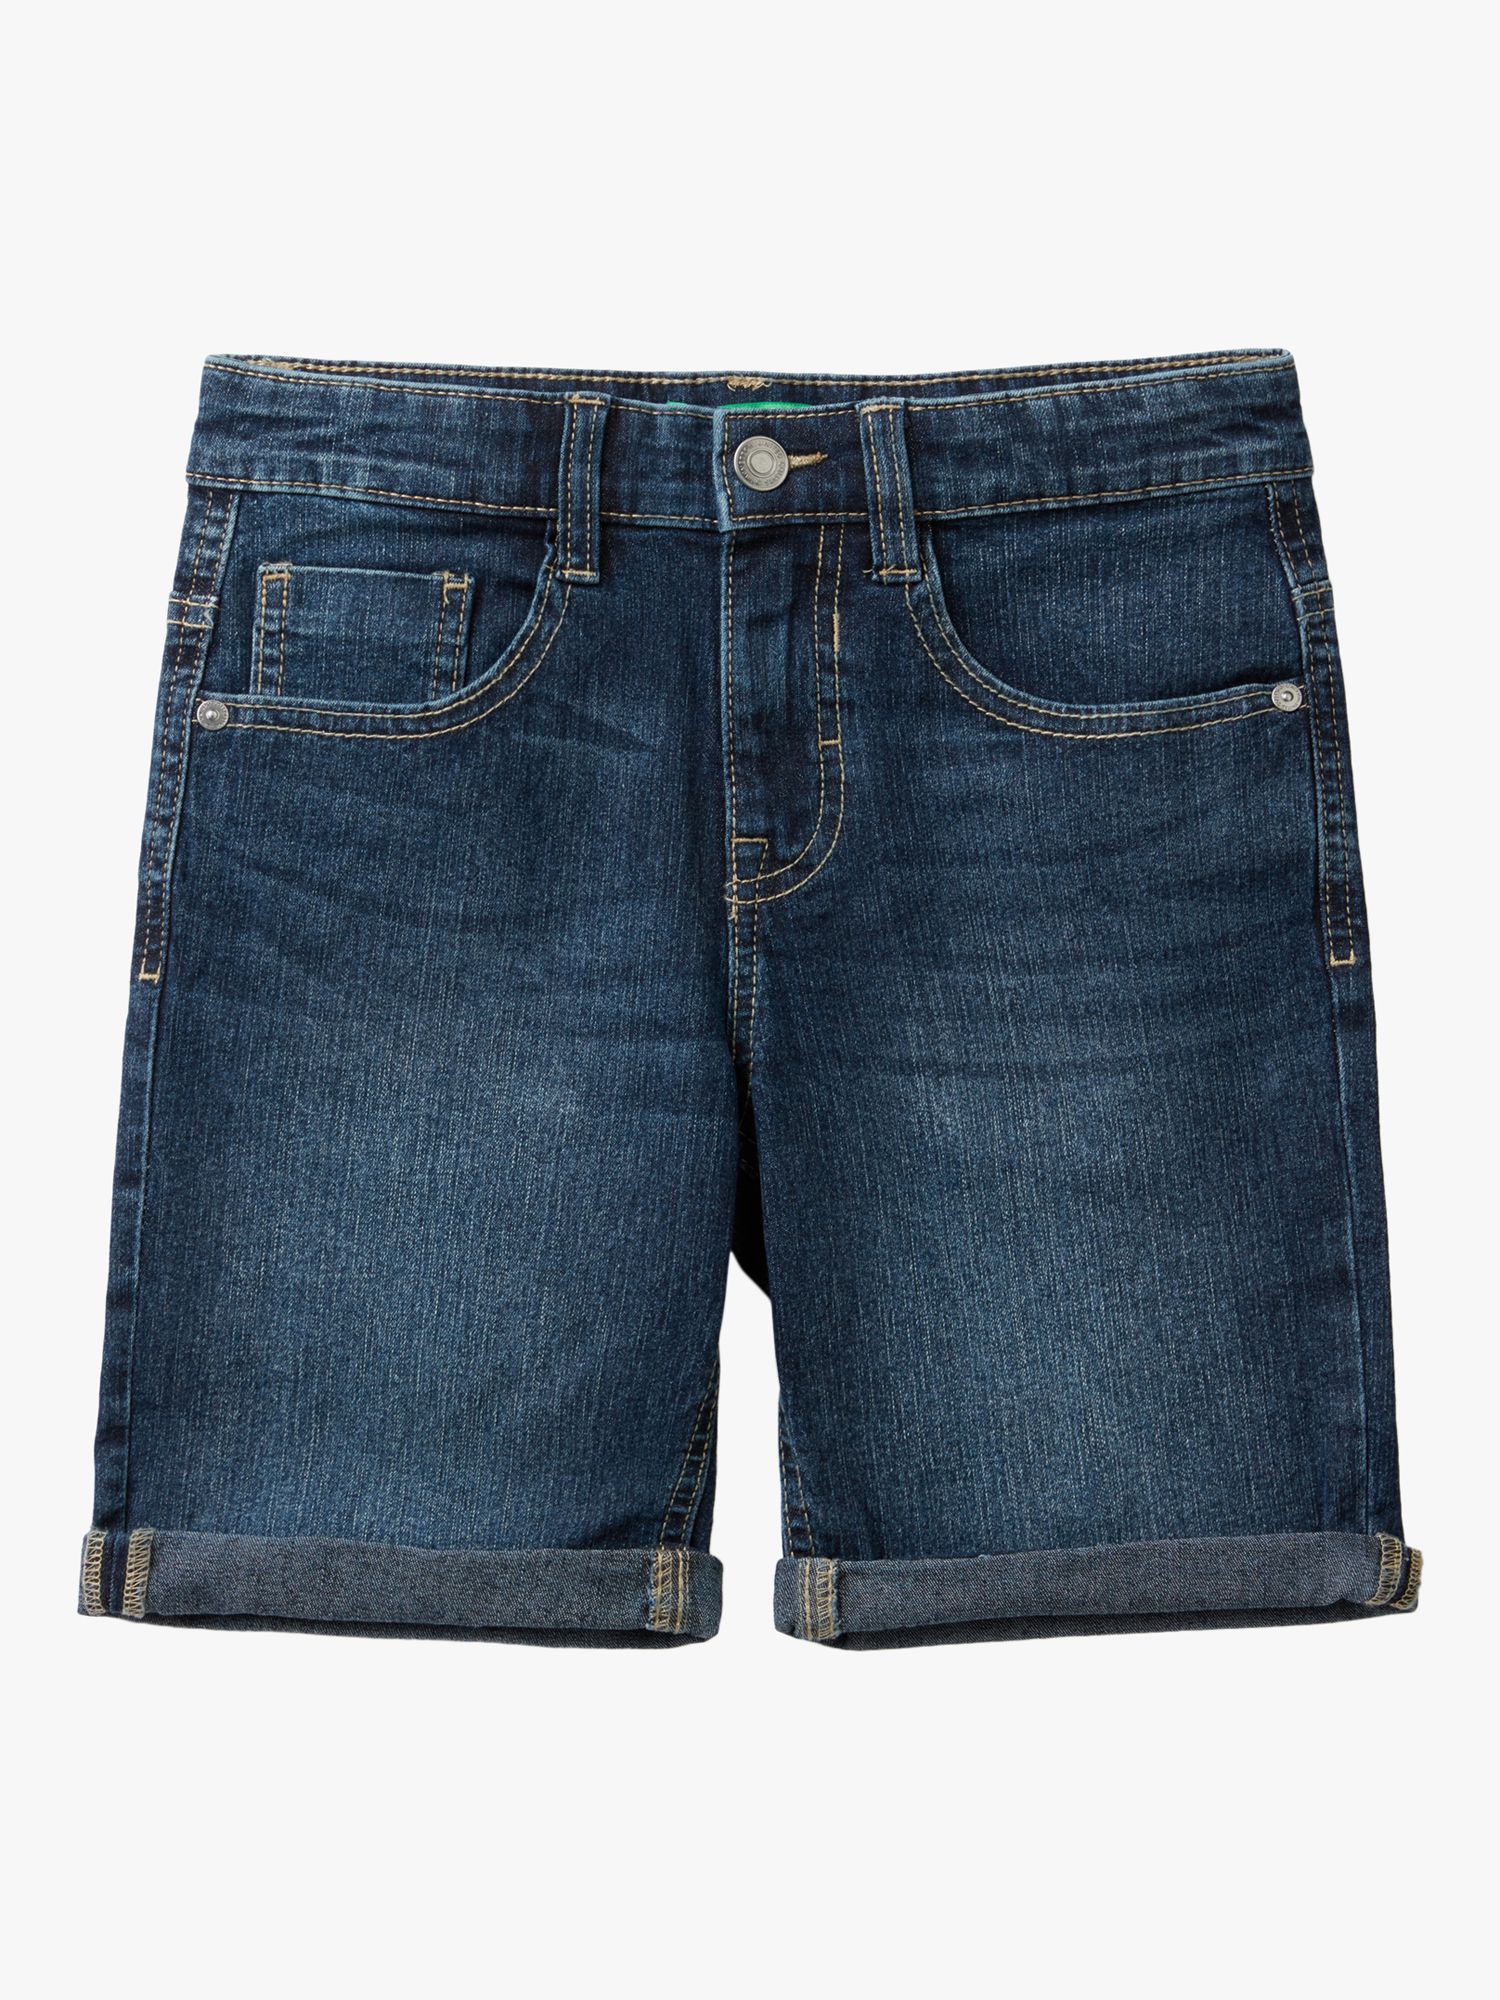 Benetton Kids' Classic Denim Shorts, Blue, 6-7 years